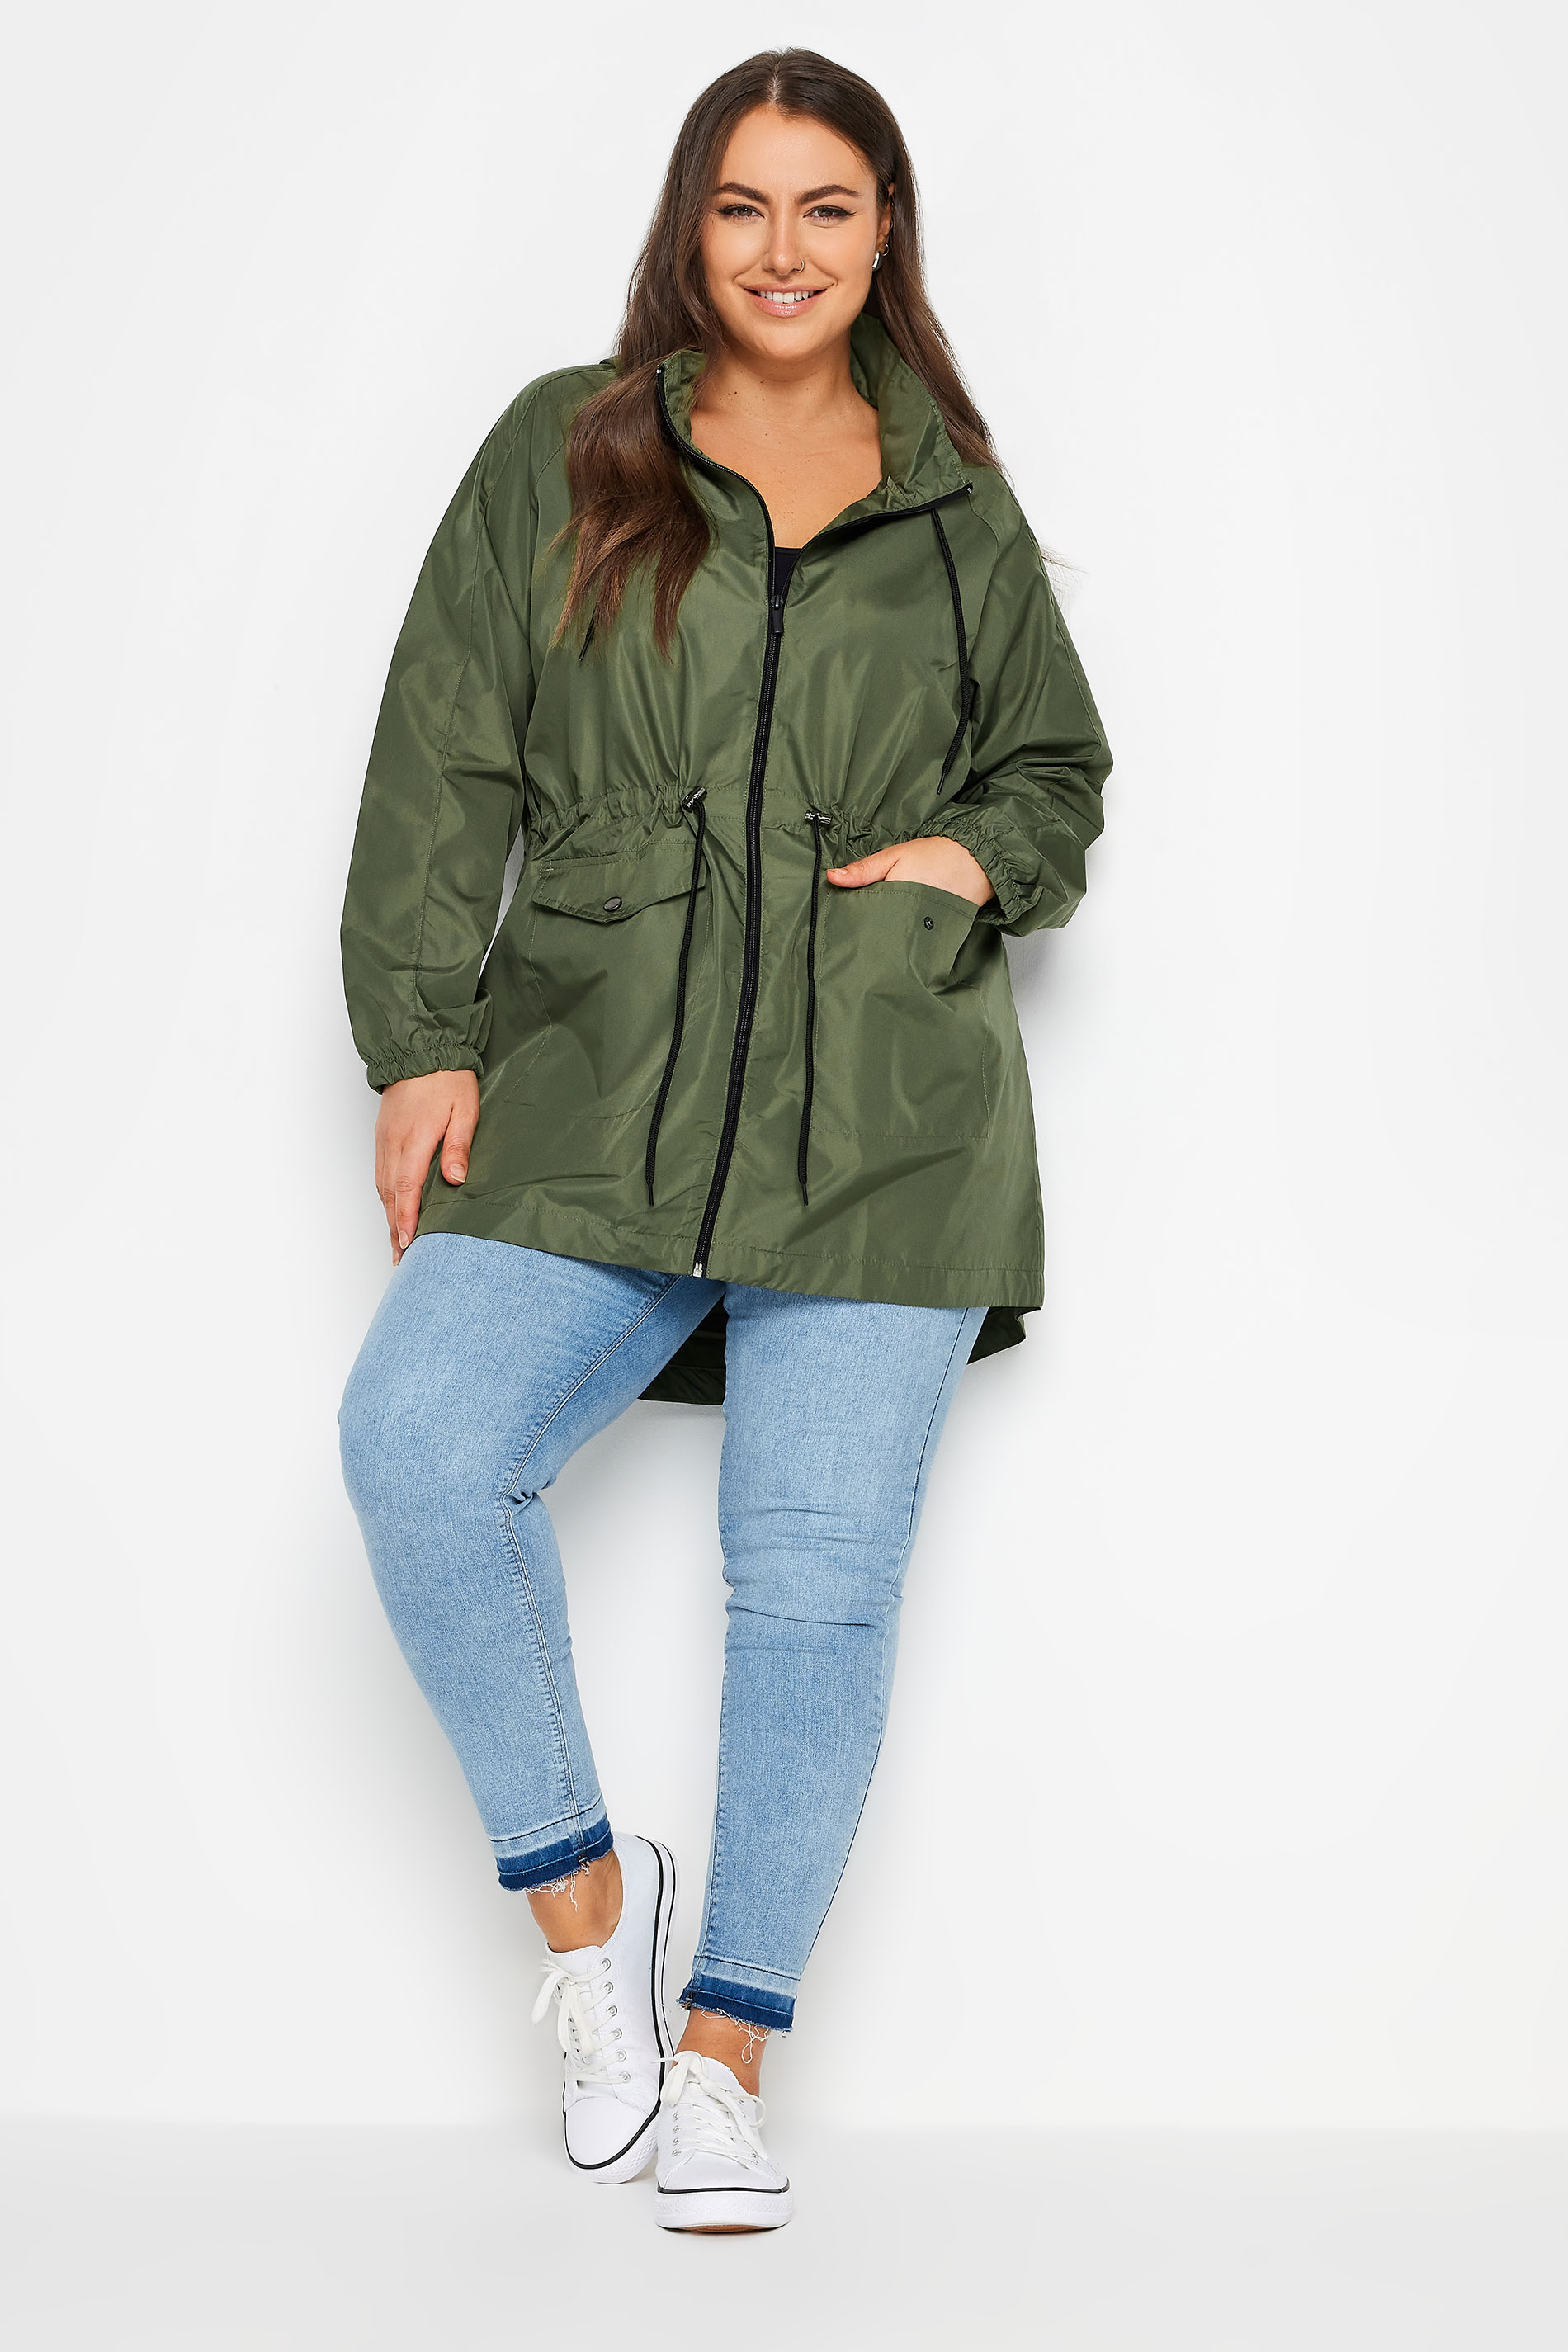 YOURS Plus Size Khaki Green Drawstring Lightweight Parka Jacket | Yours Clothing 2